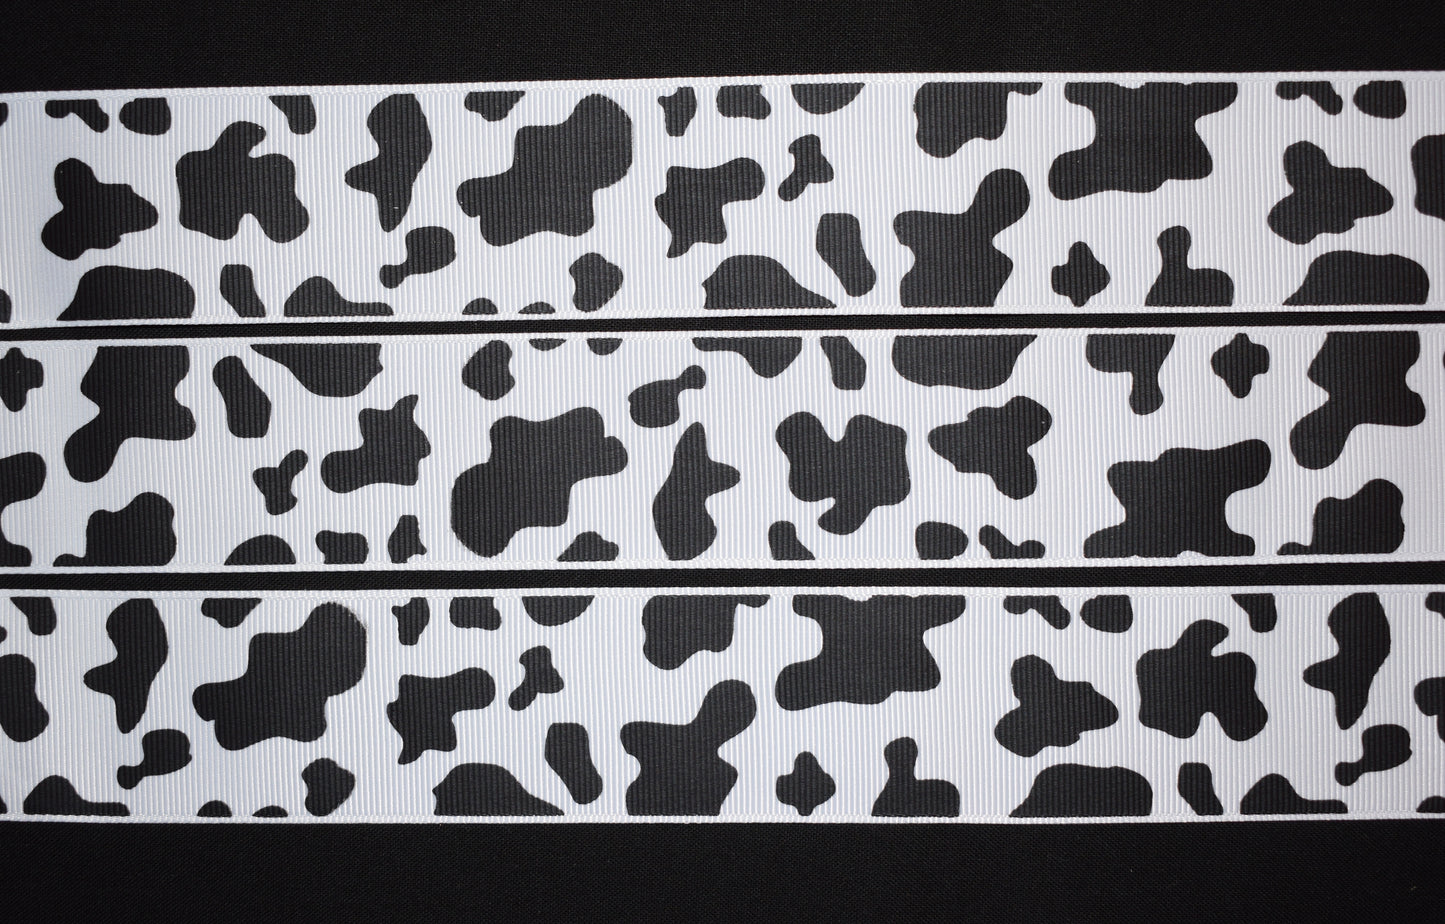 Cow Print Ribbon - 1 1/2 inch Printed Grosgrain Ribbon – Flippin